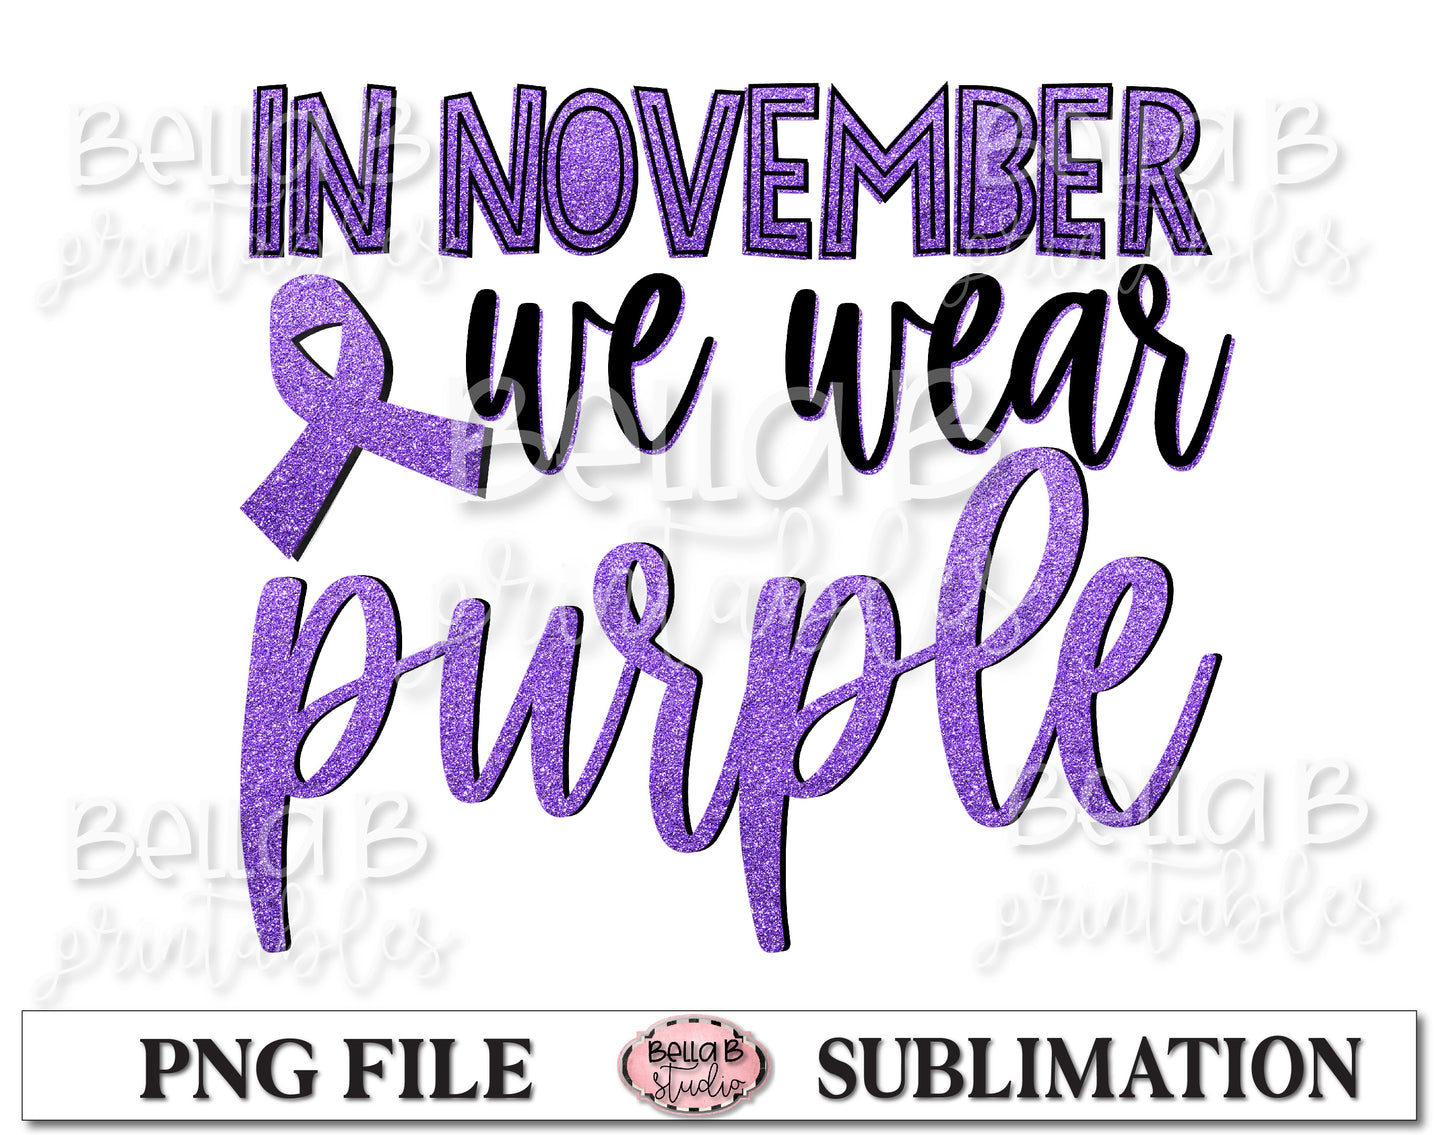 Epilepsy Awareness Month Sublimation Design, In November We Wear Purple